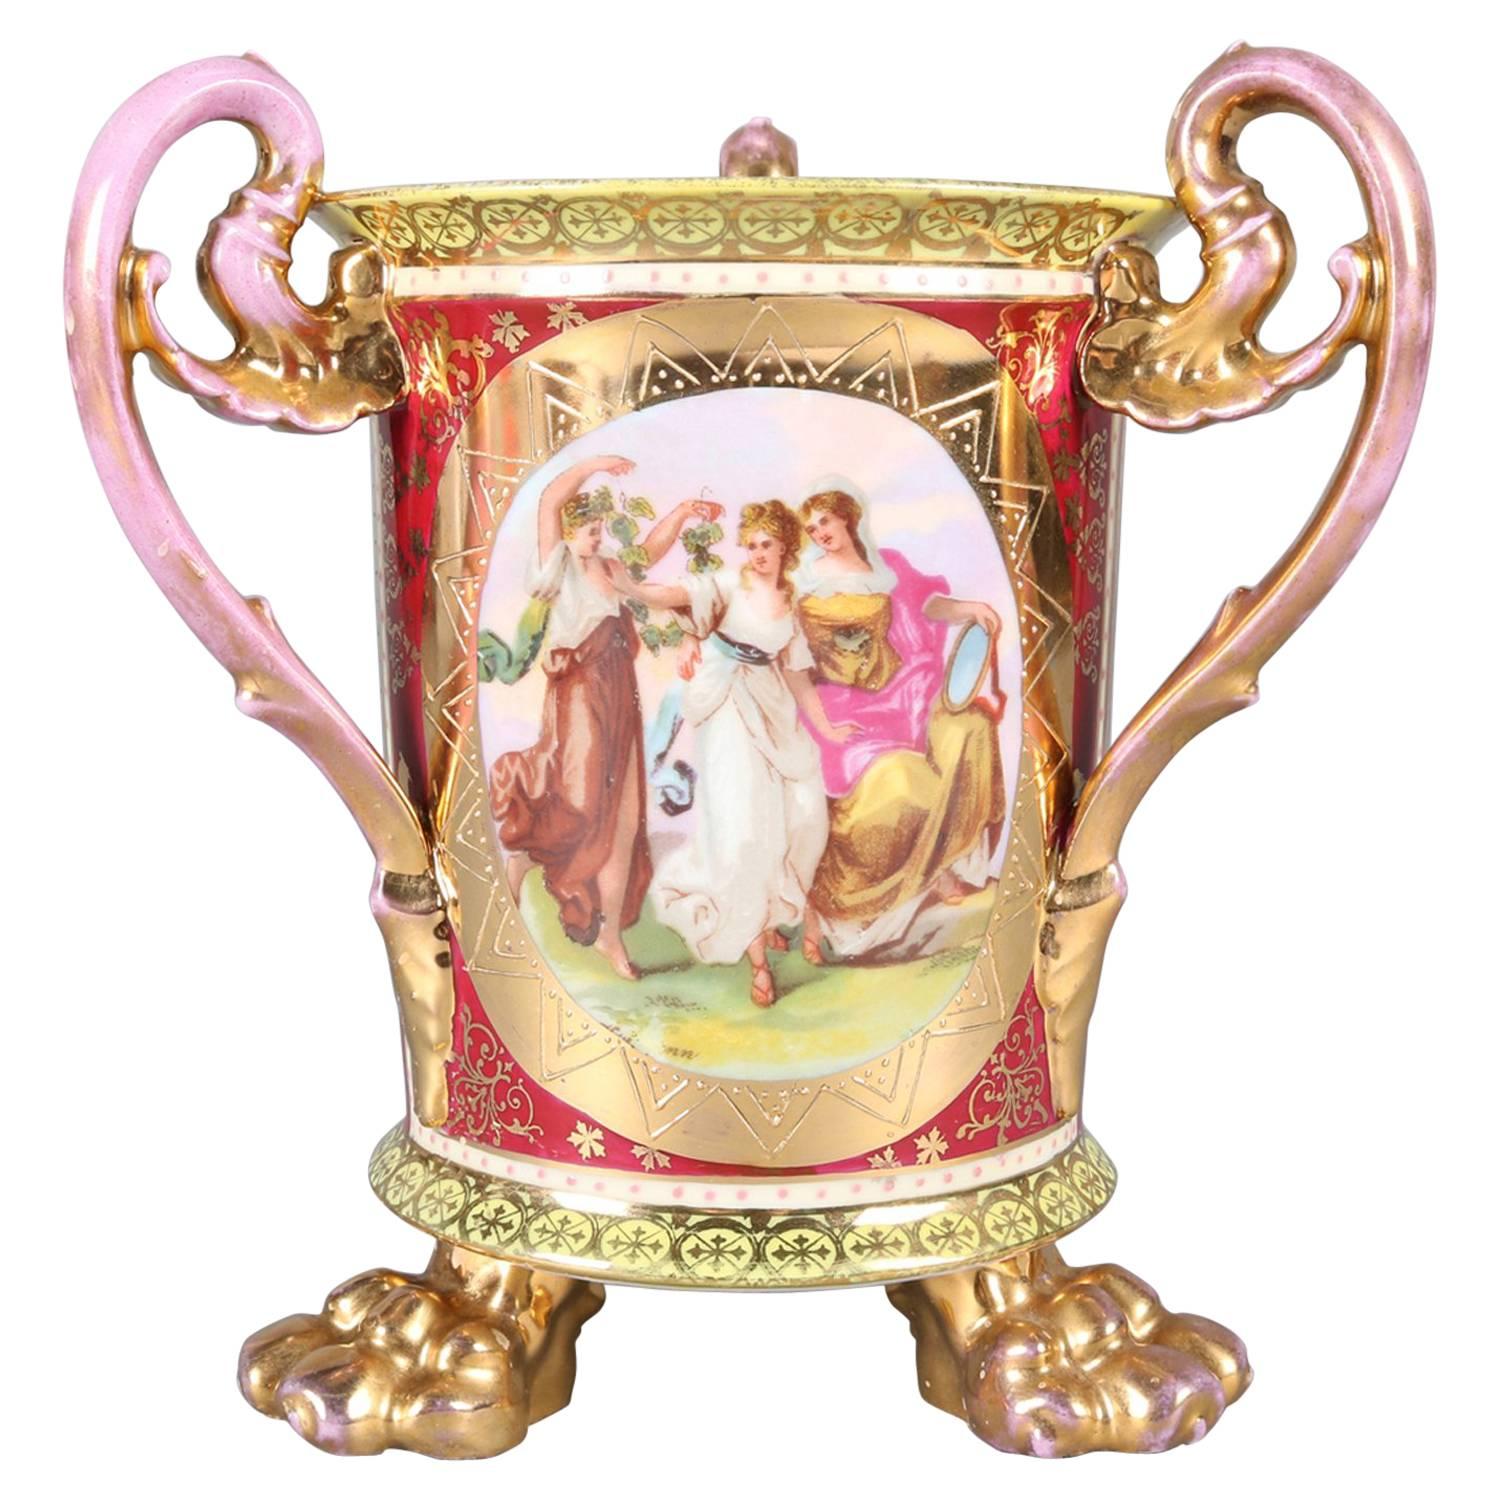 Austrian Royal Vienna Hand-Painted and Gilt 3-Handled Loving Cup, circa 1890